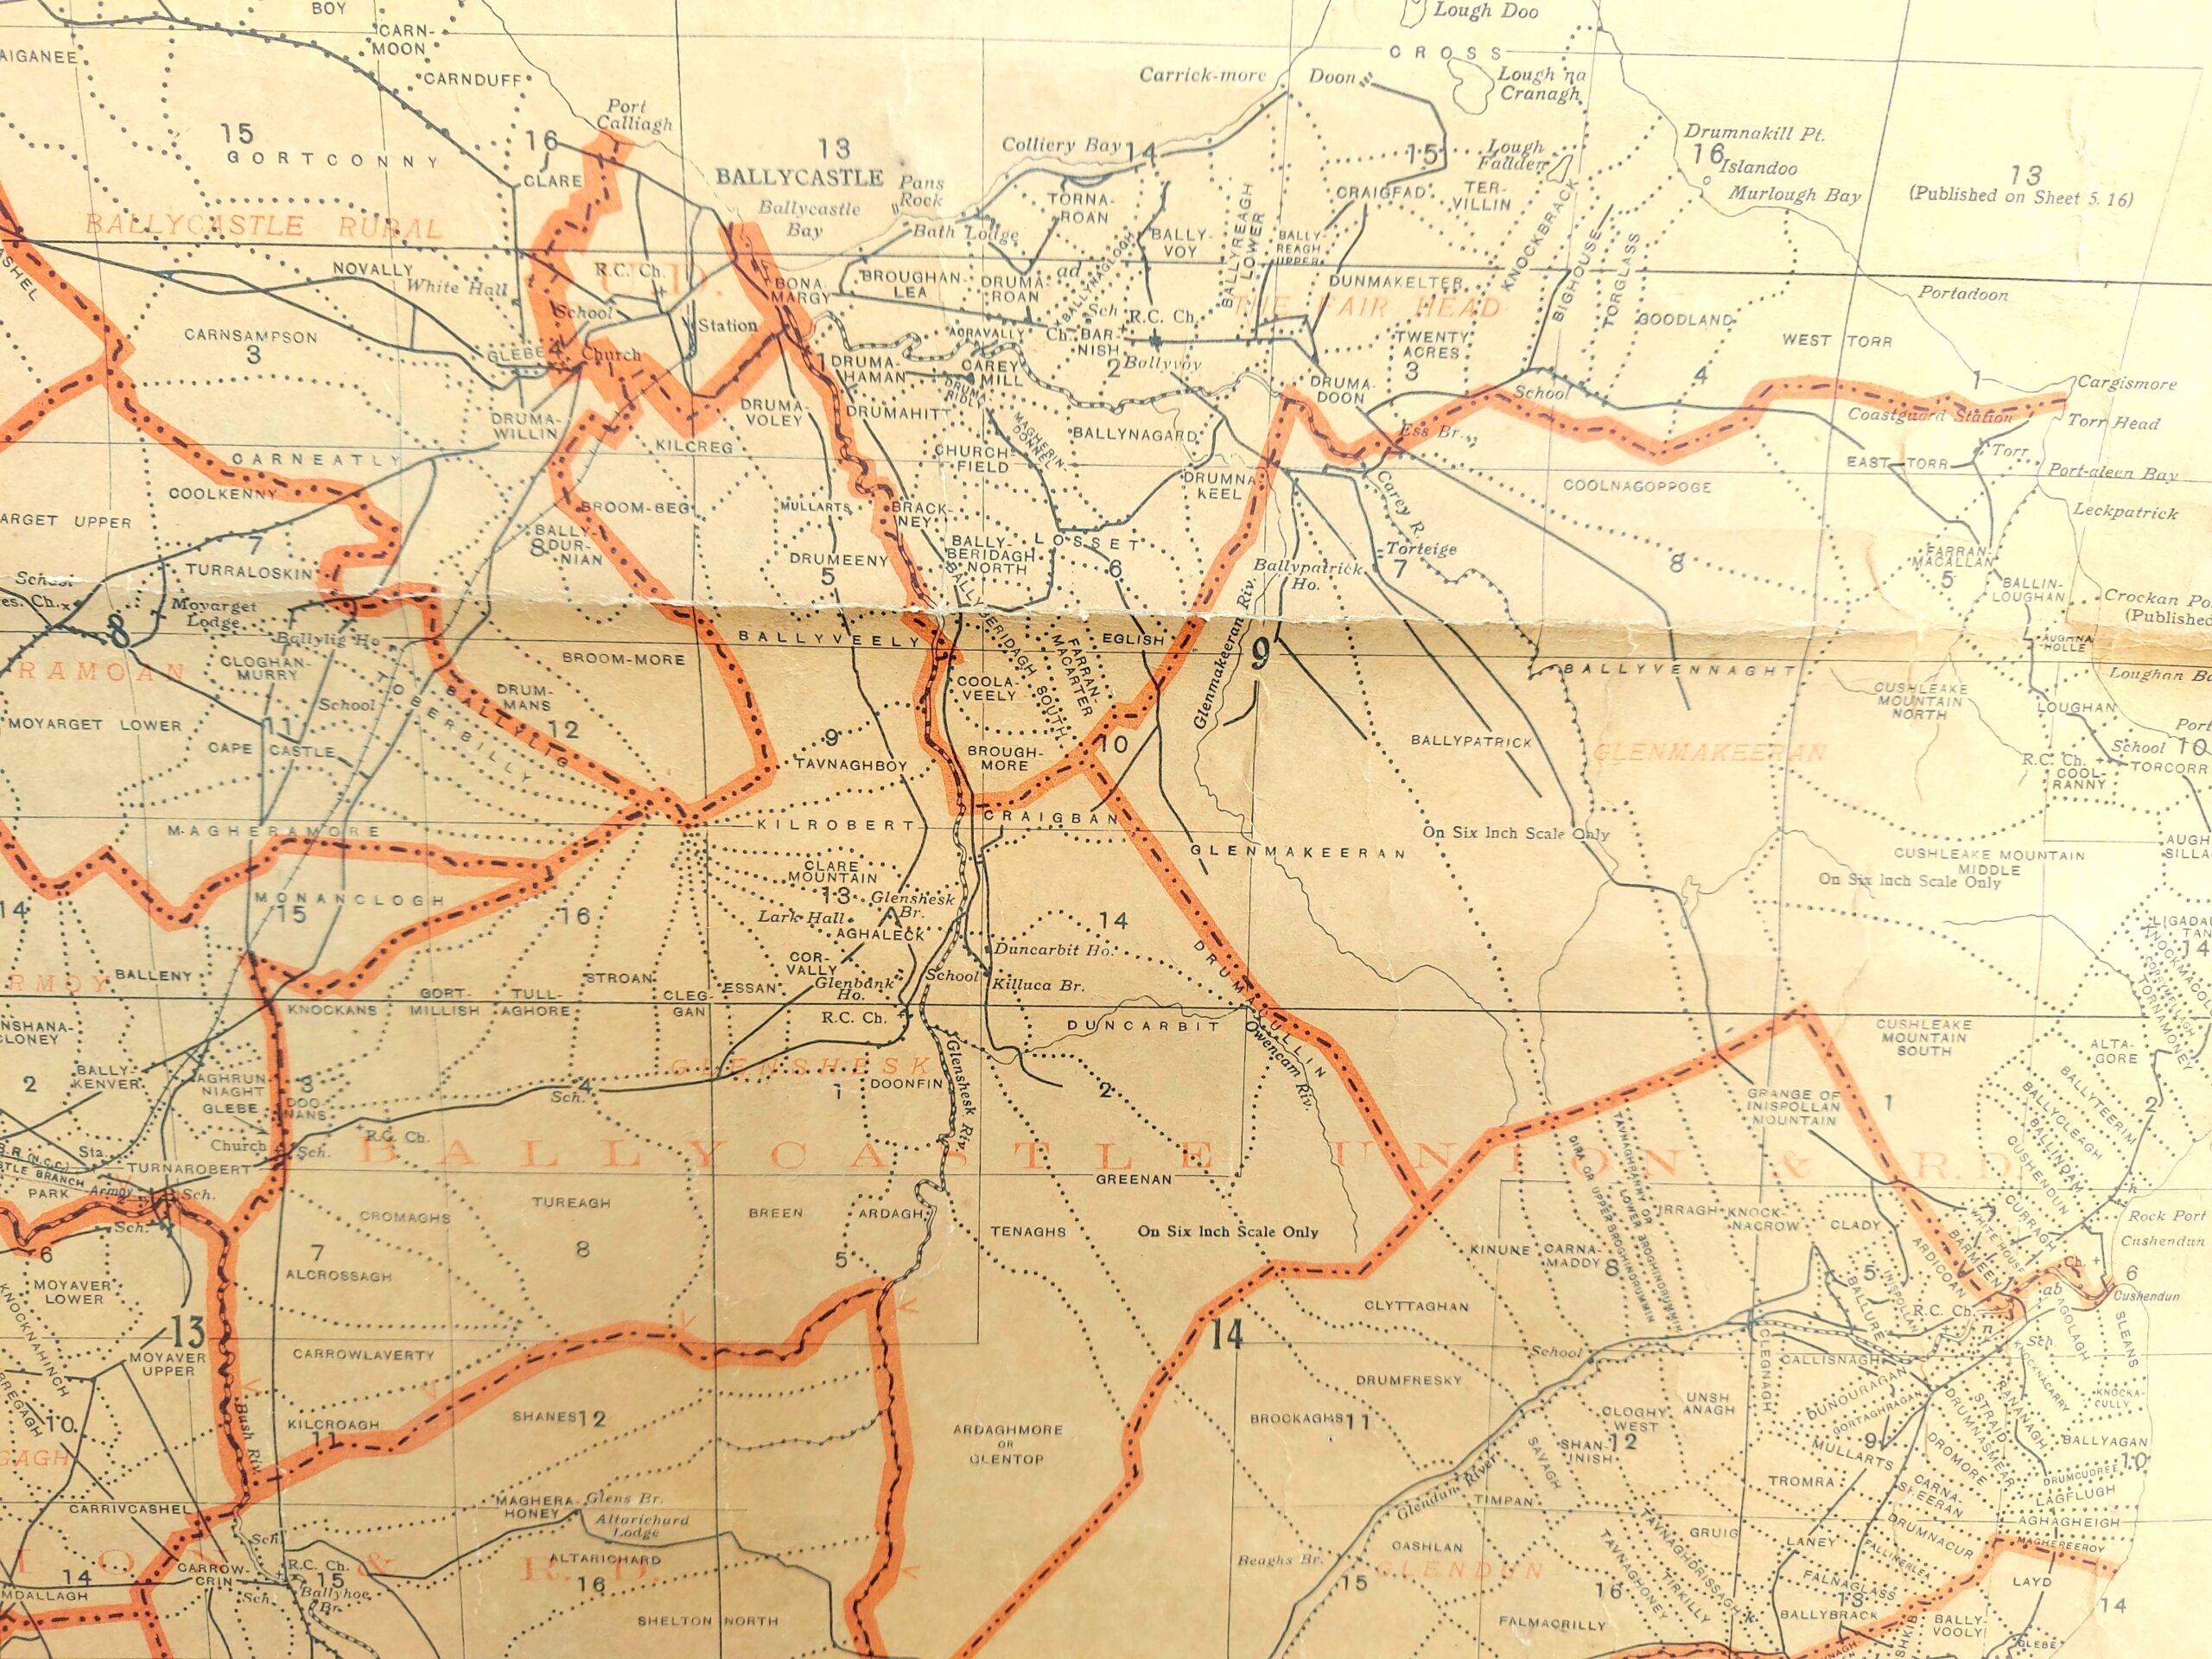 OS Map, 1943